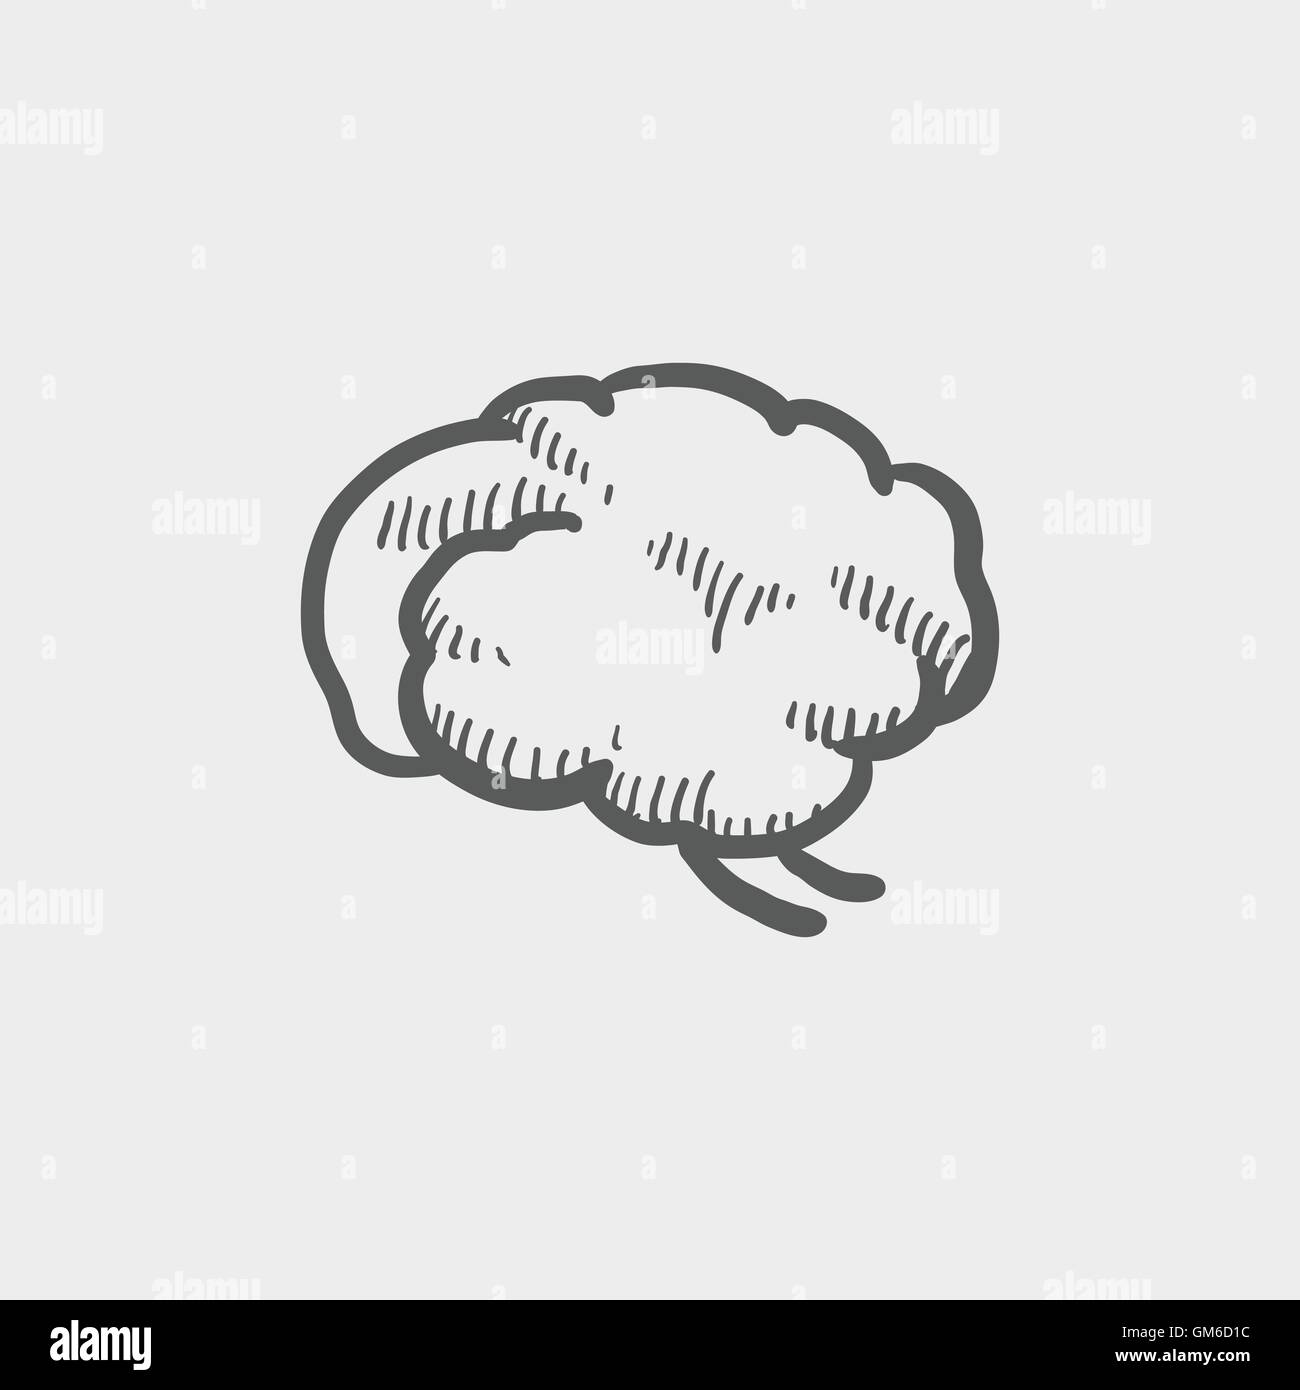 Human brain sketch icon Stock Vector